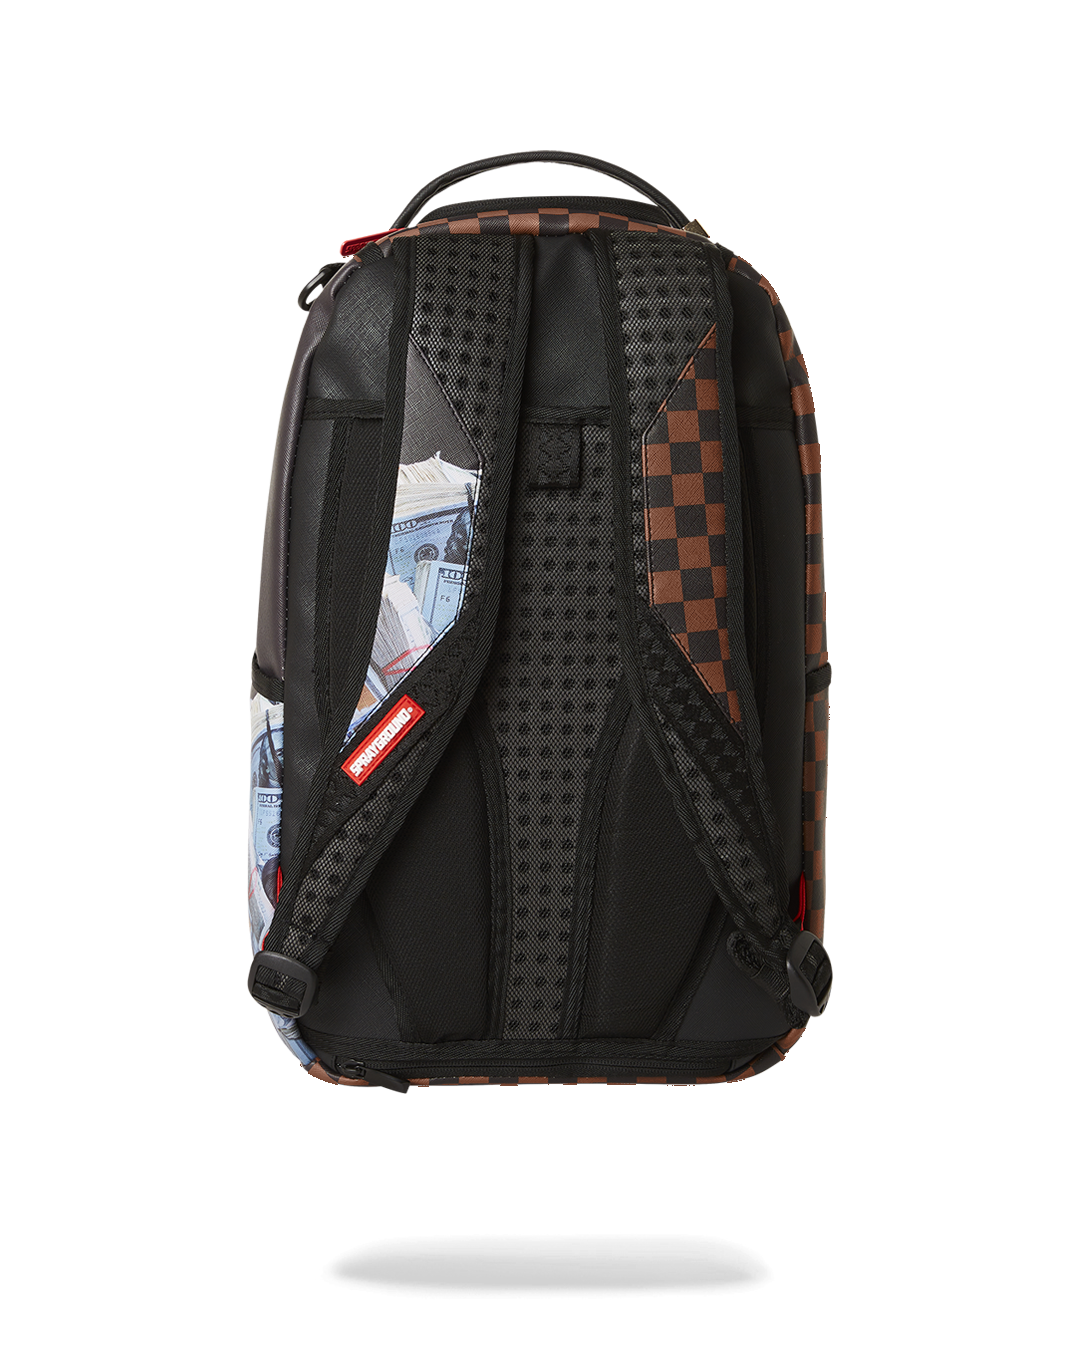 Sprayground Slime Shark Checkered Backpack - Black  Messenger bag men,  Louis vuitton bag outfit, Louis vuitton outfit